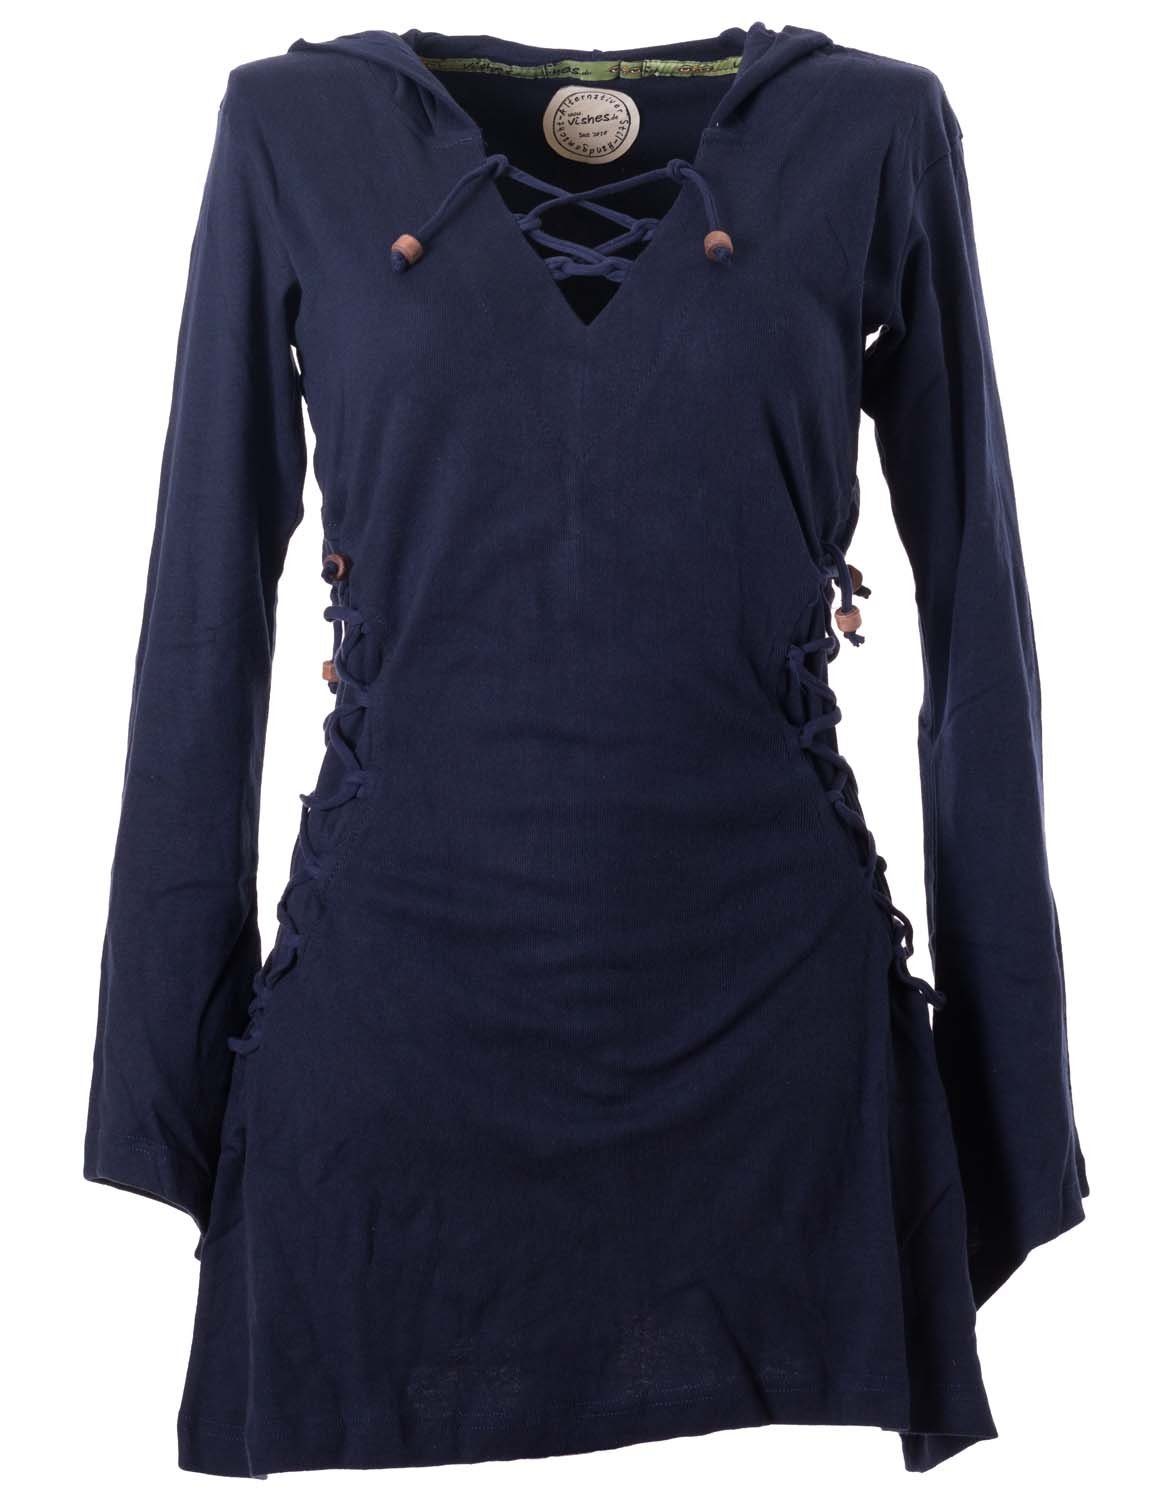 Vishes Zipfelkleid Elfenkleid mit Zipfelkapuze Bändern zum Schnüren Ethno, Hoody, Gothik Style dunkelblau